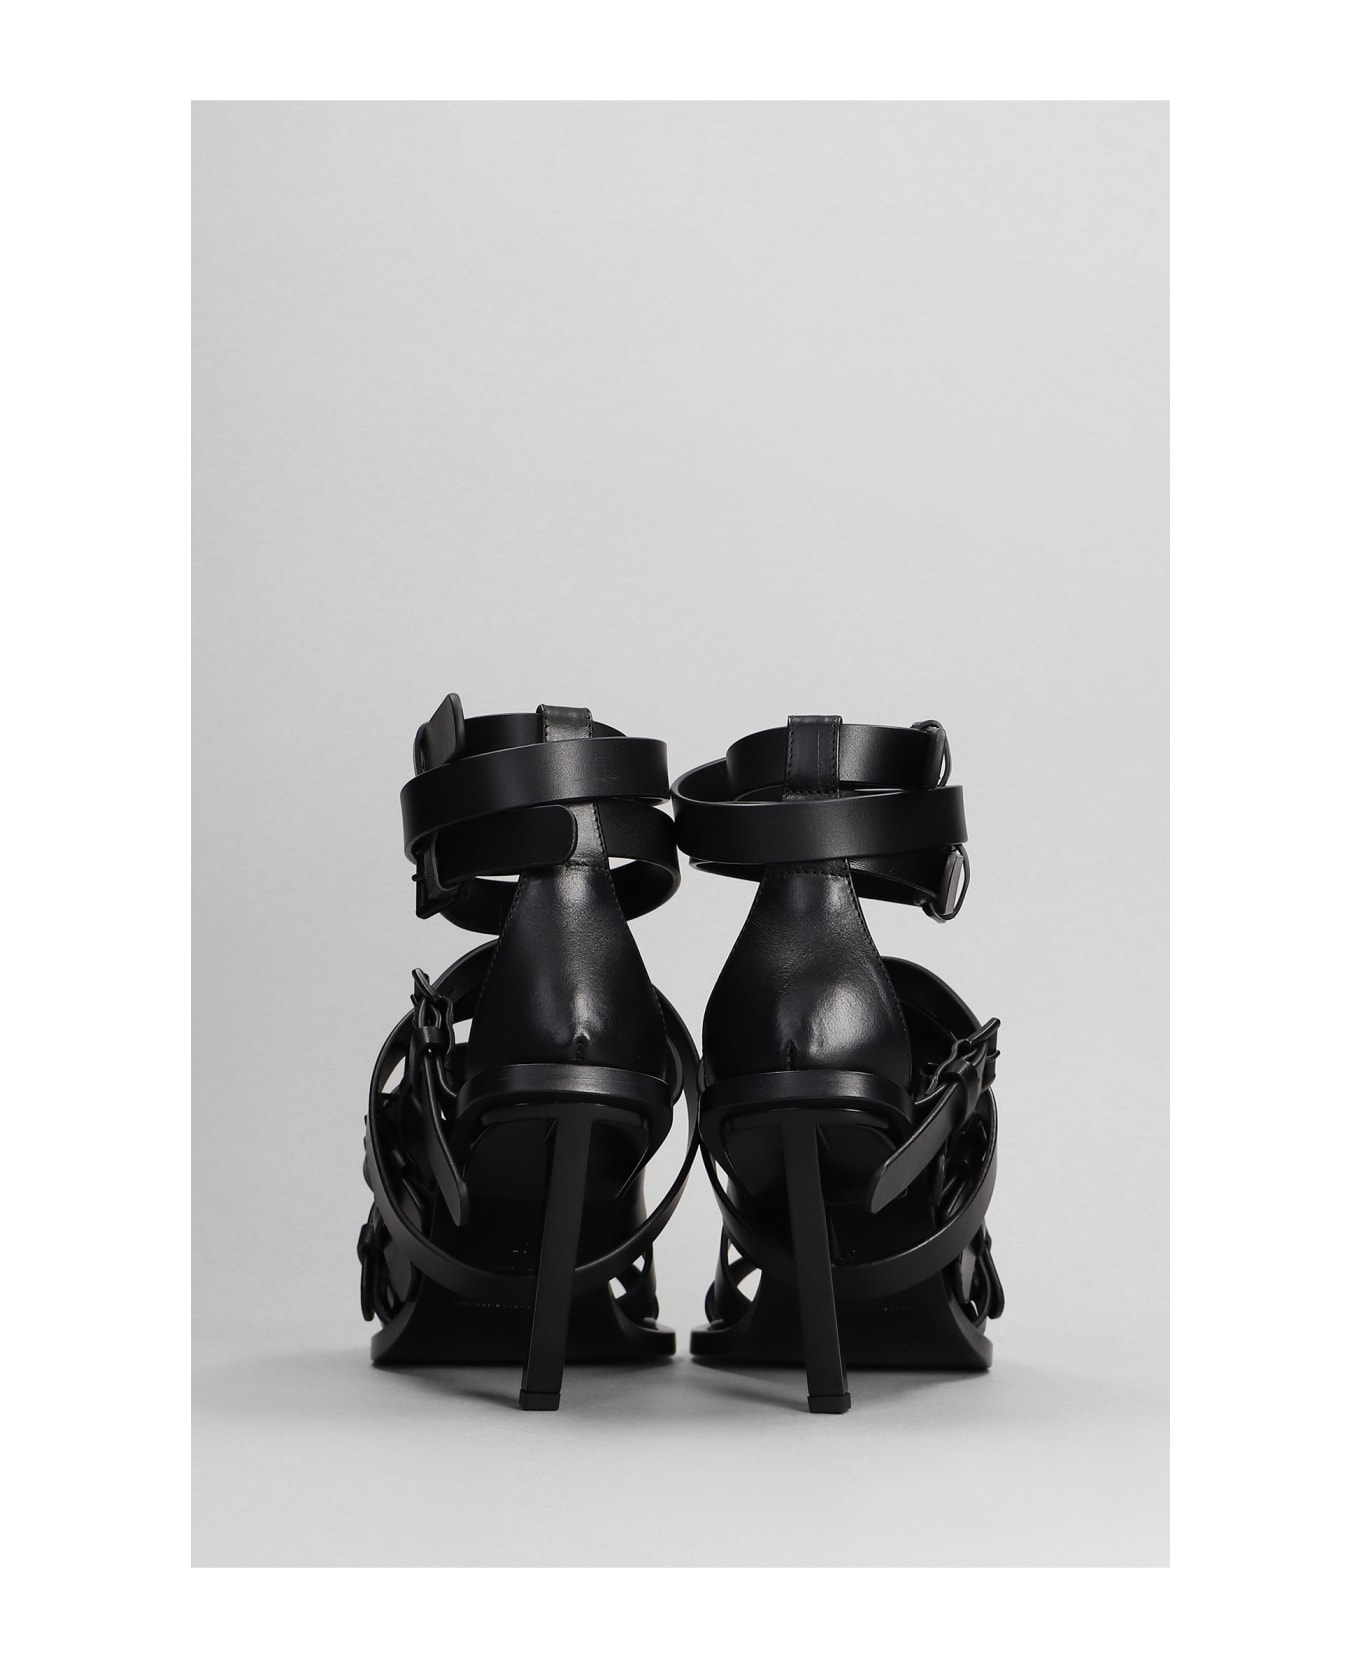 Ann Demeulemeester Sandals In Black Leather - black